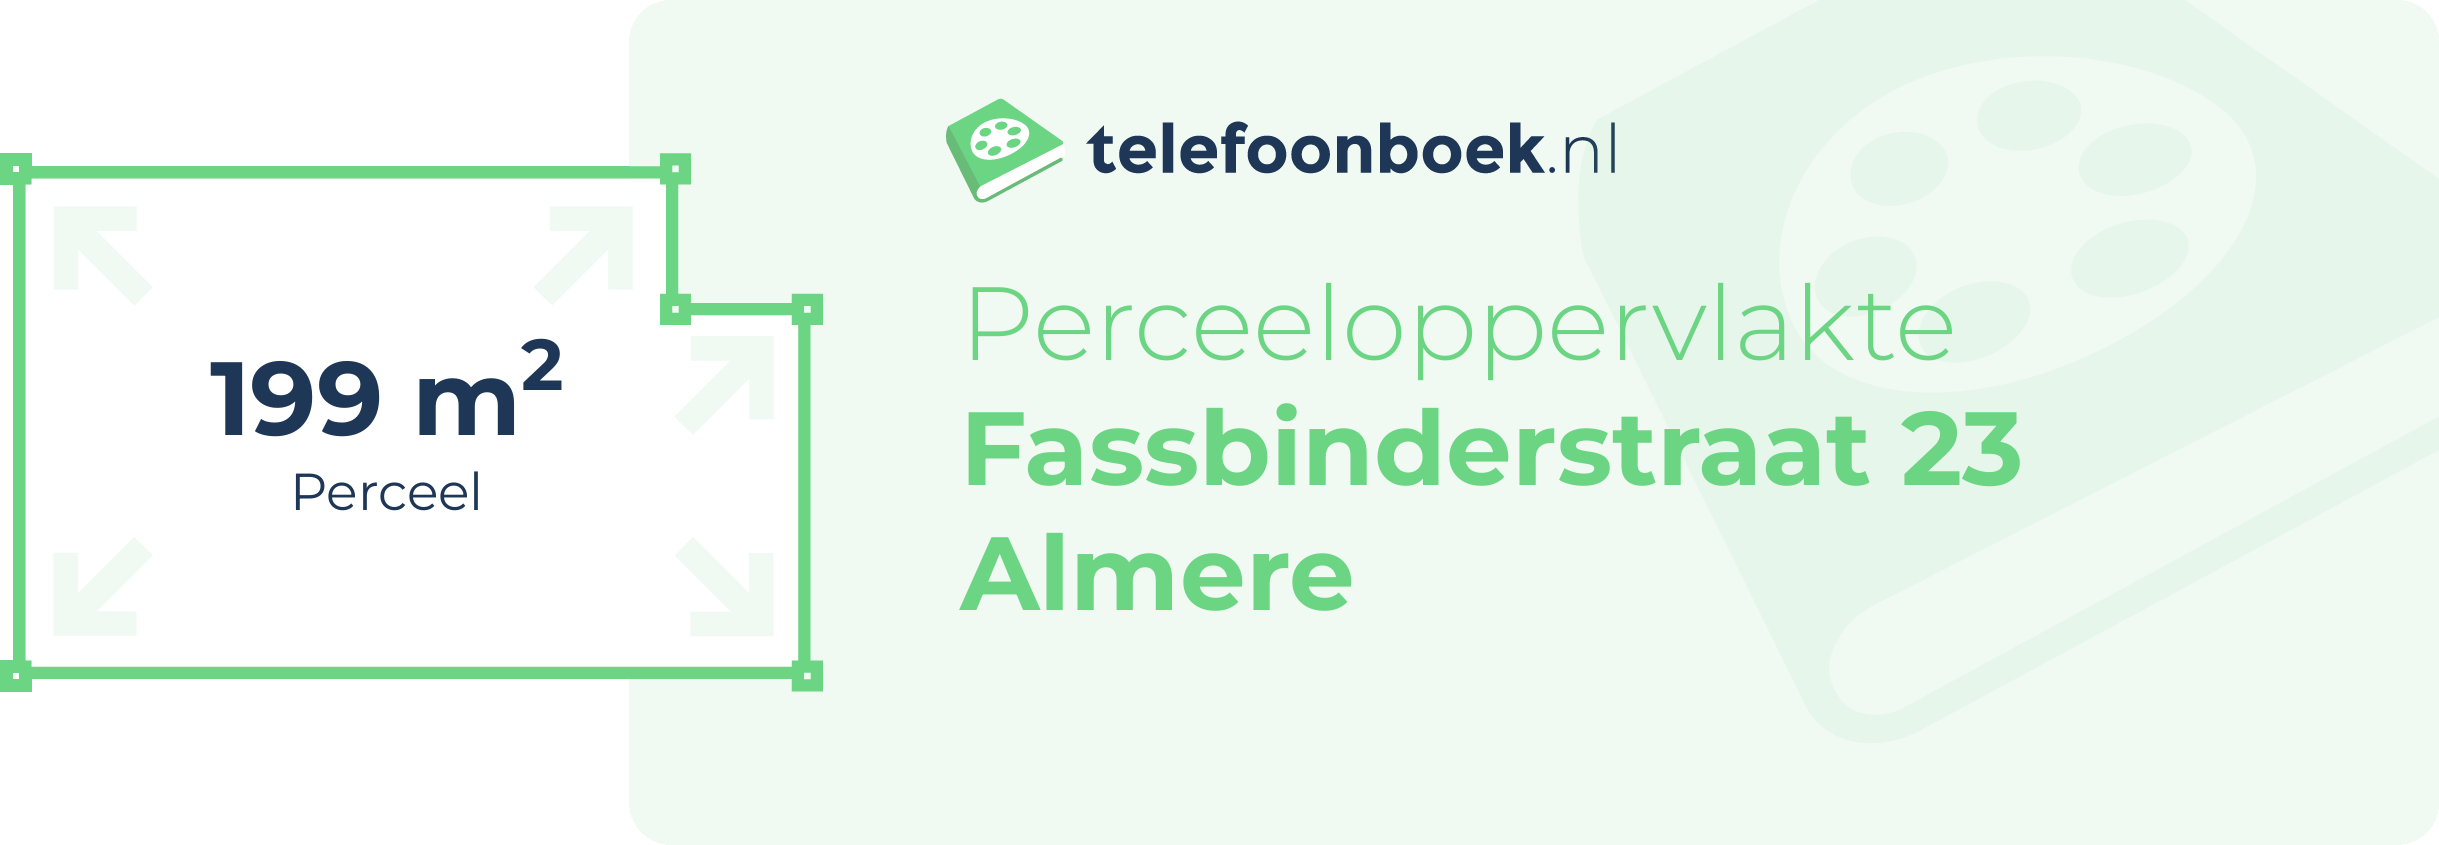 Perceeloppervlakte Fassbinderstraat 23 Almere